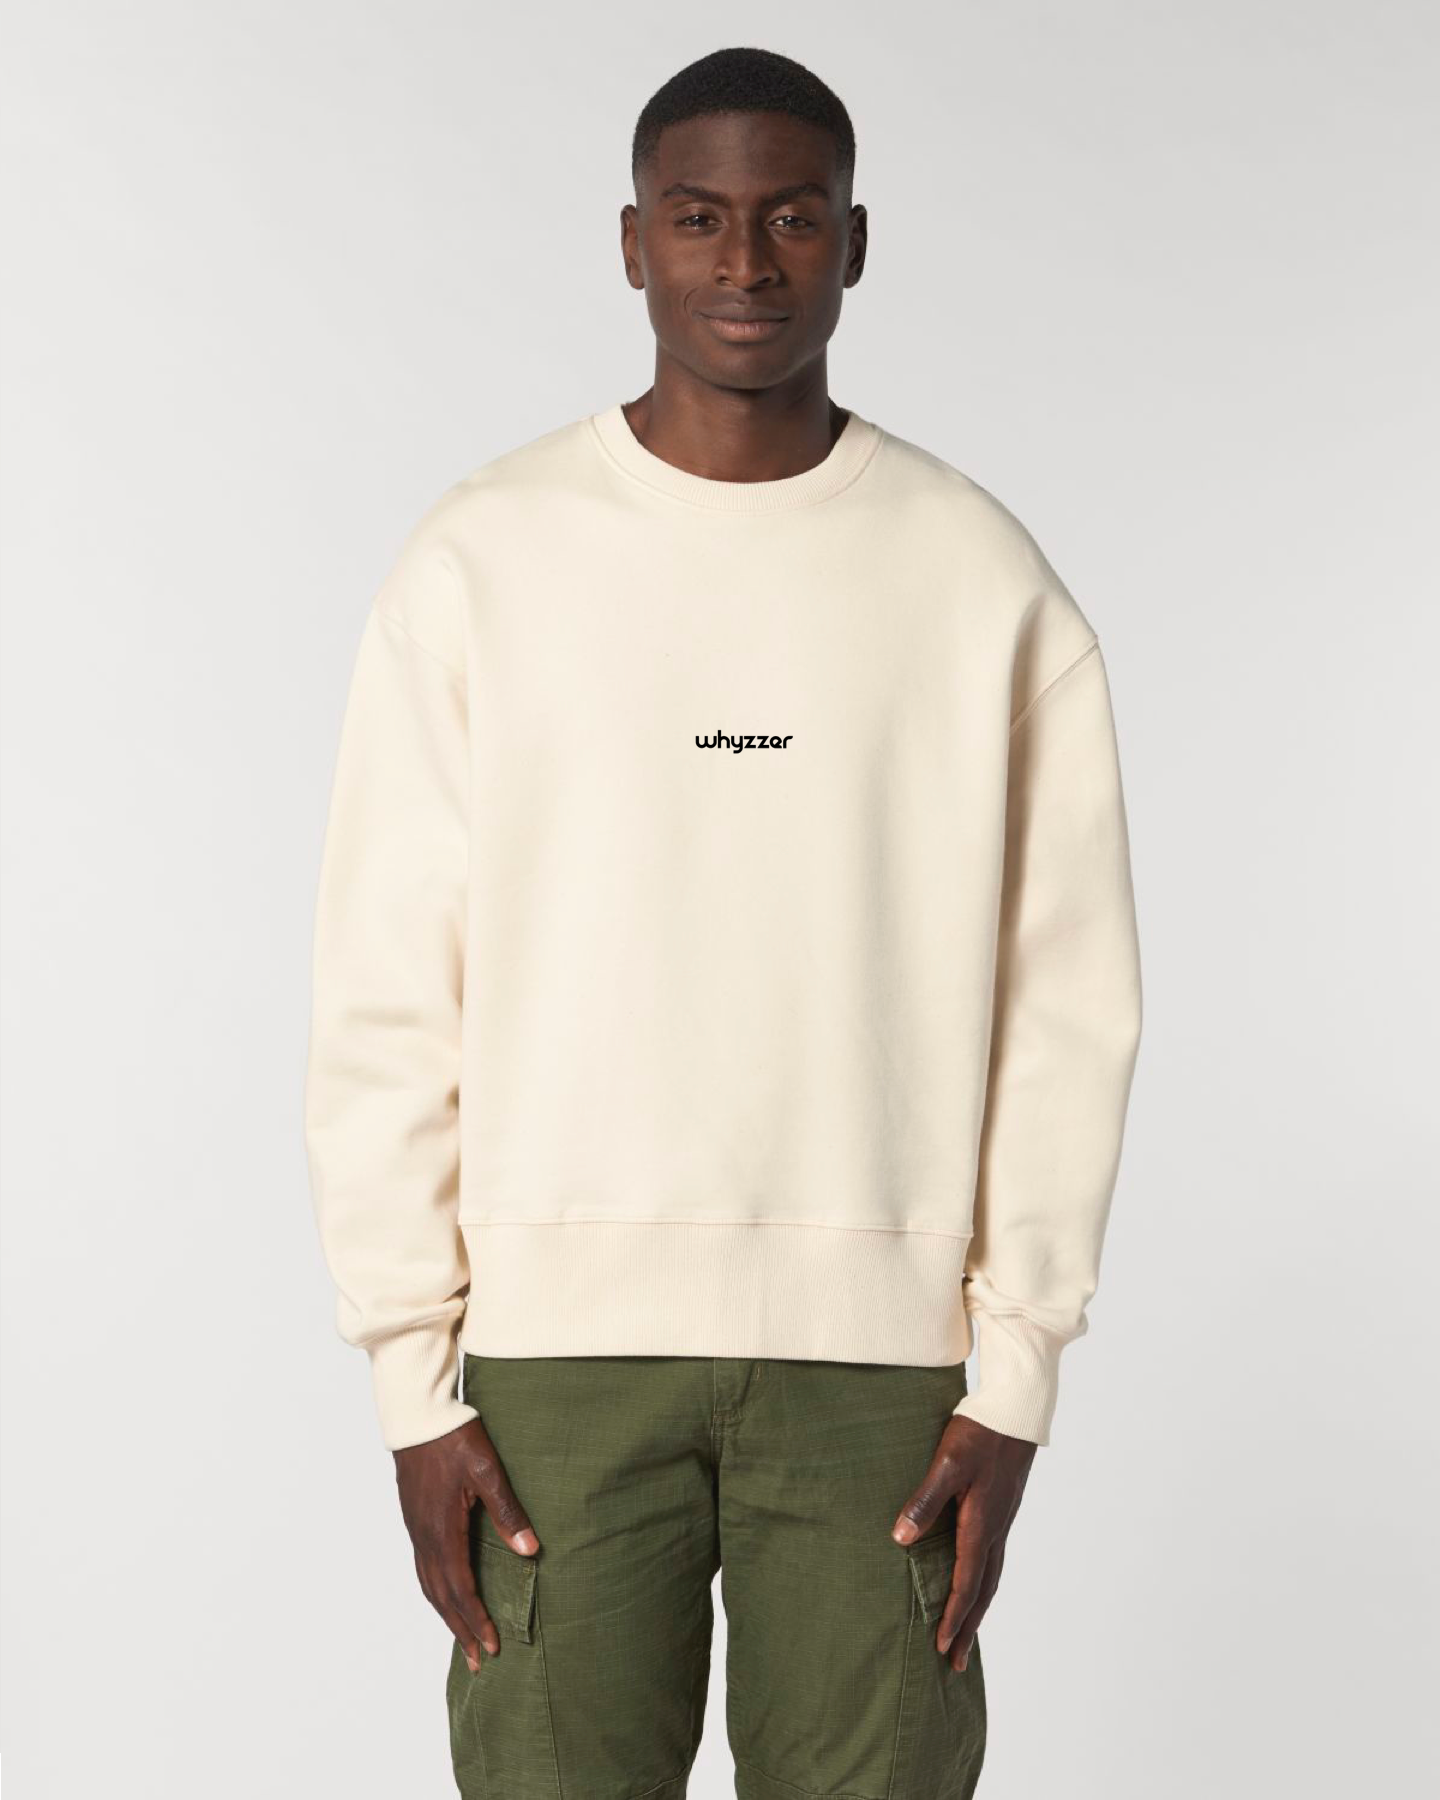 Whyzzer - Unisex Sweater